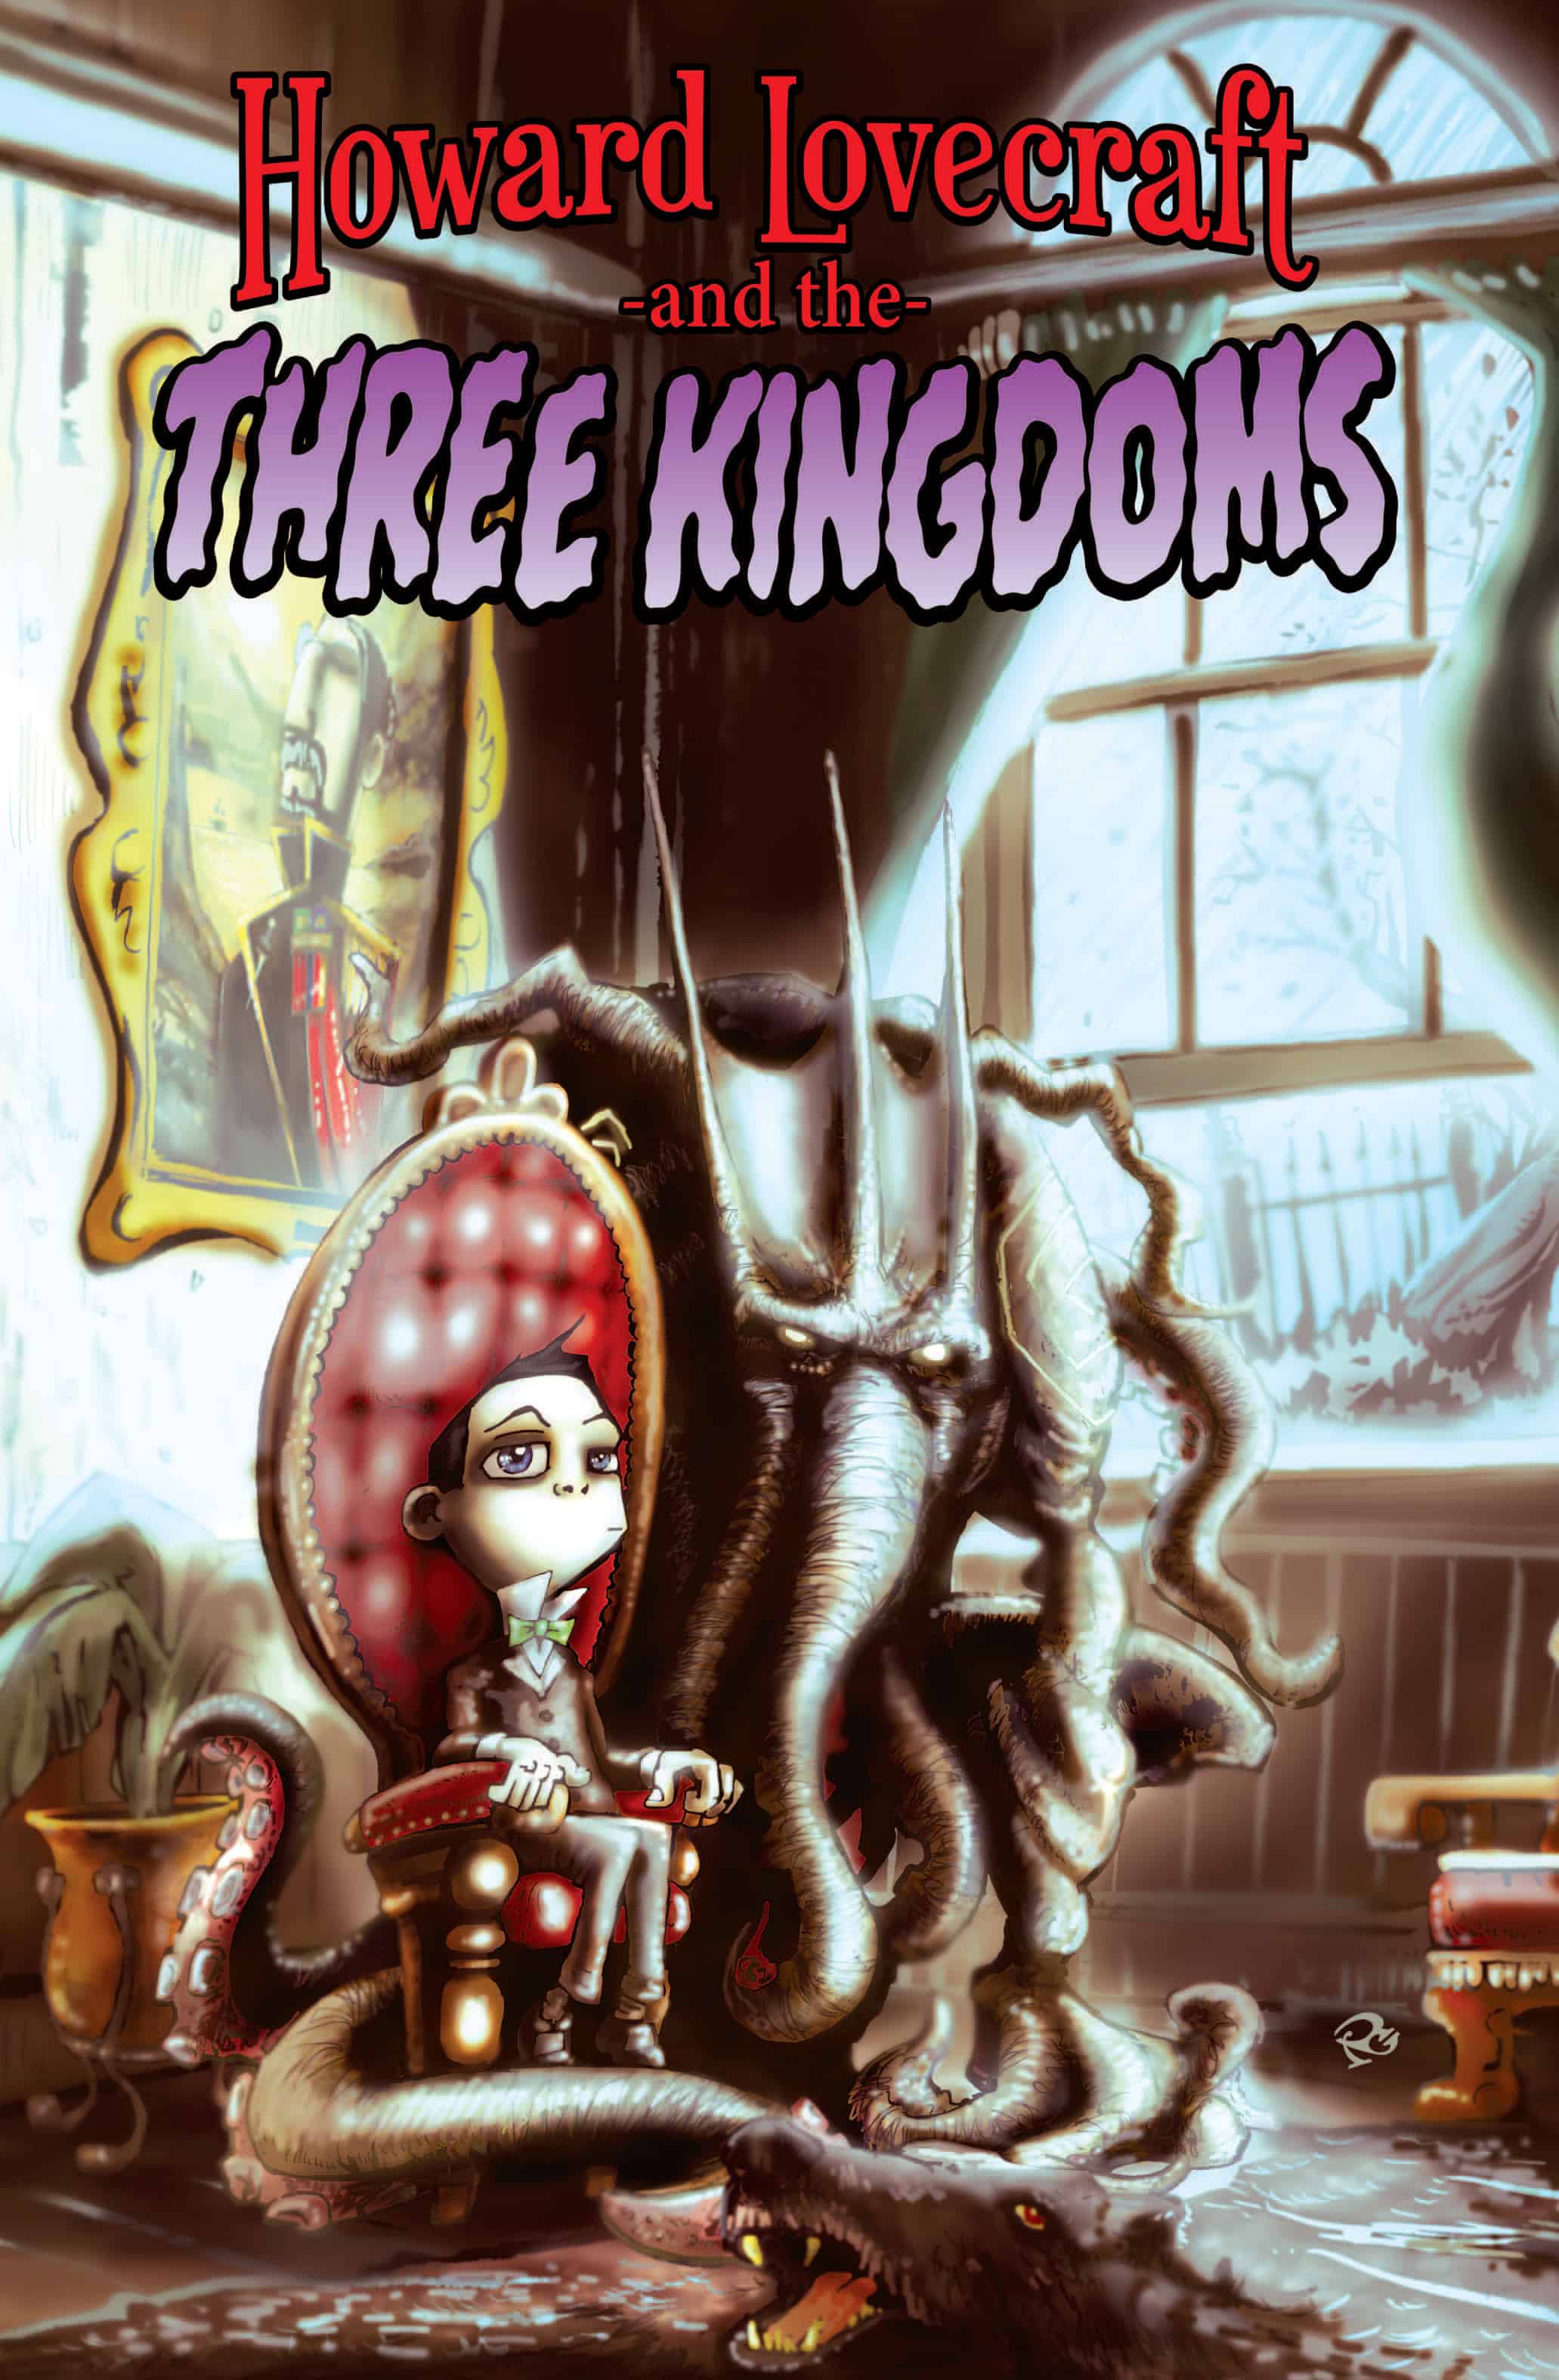 Howard_Lovecraft_Three_Kingdoms-300dpi-1